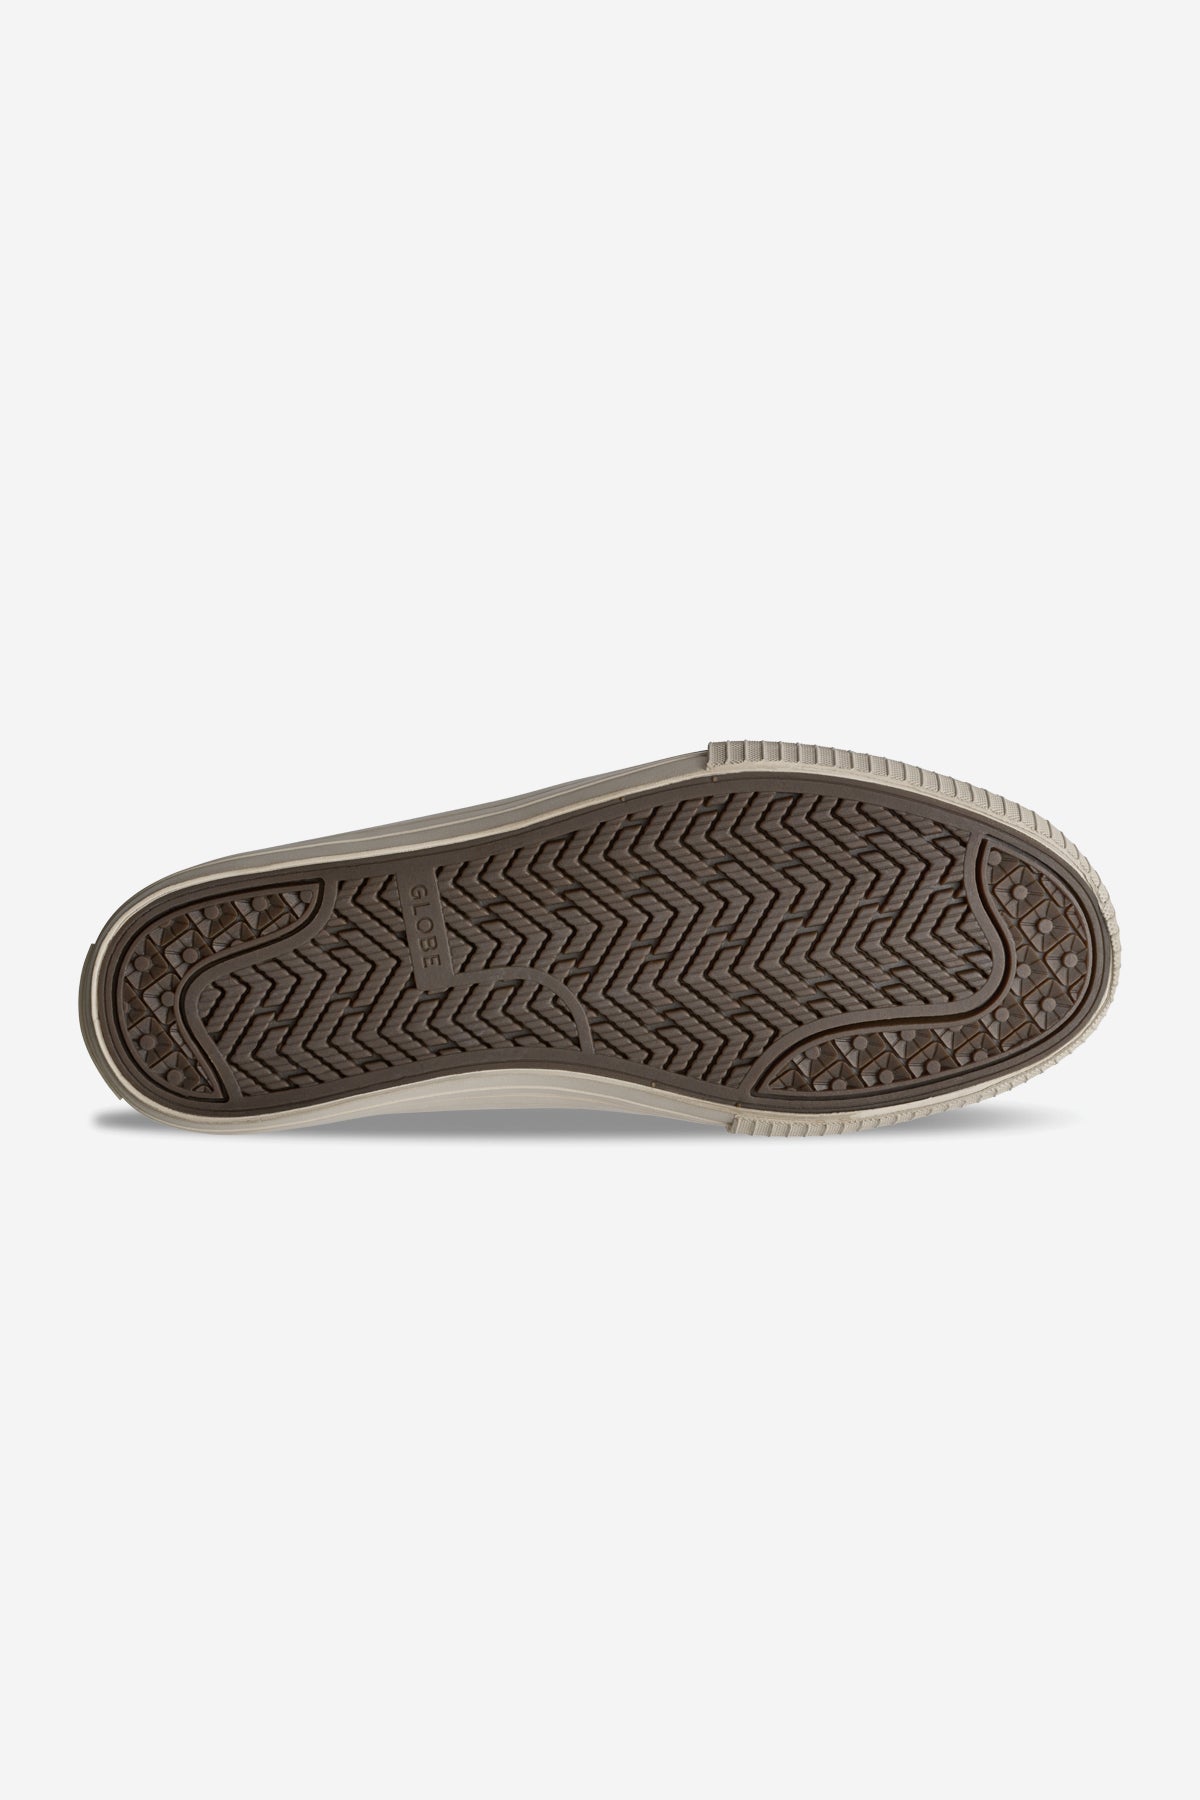 Globe - Gillette - Noir/Crème - skateboard Chaussures